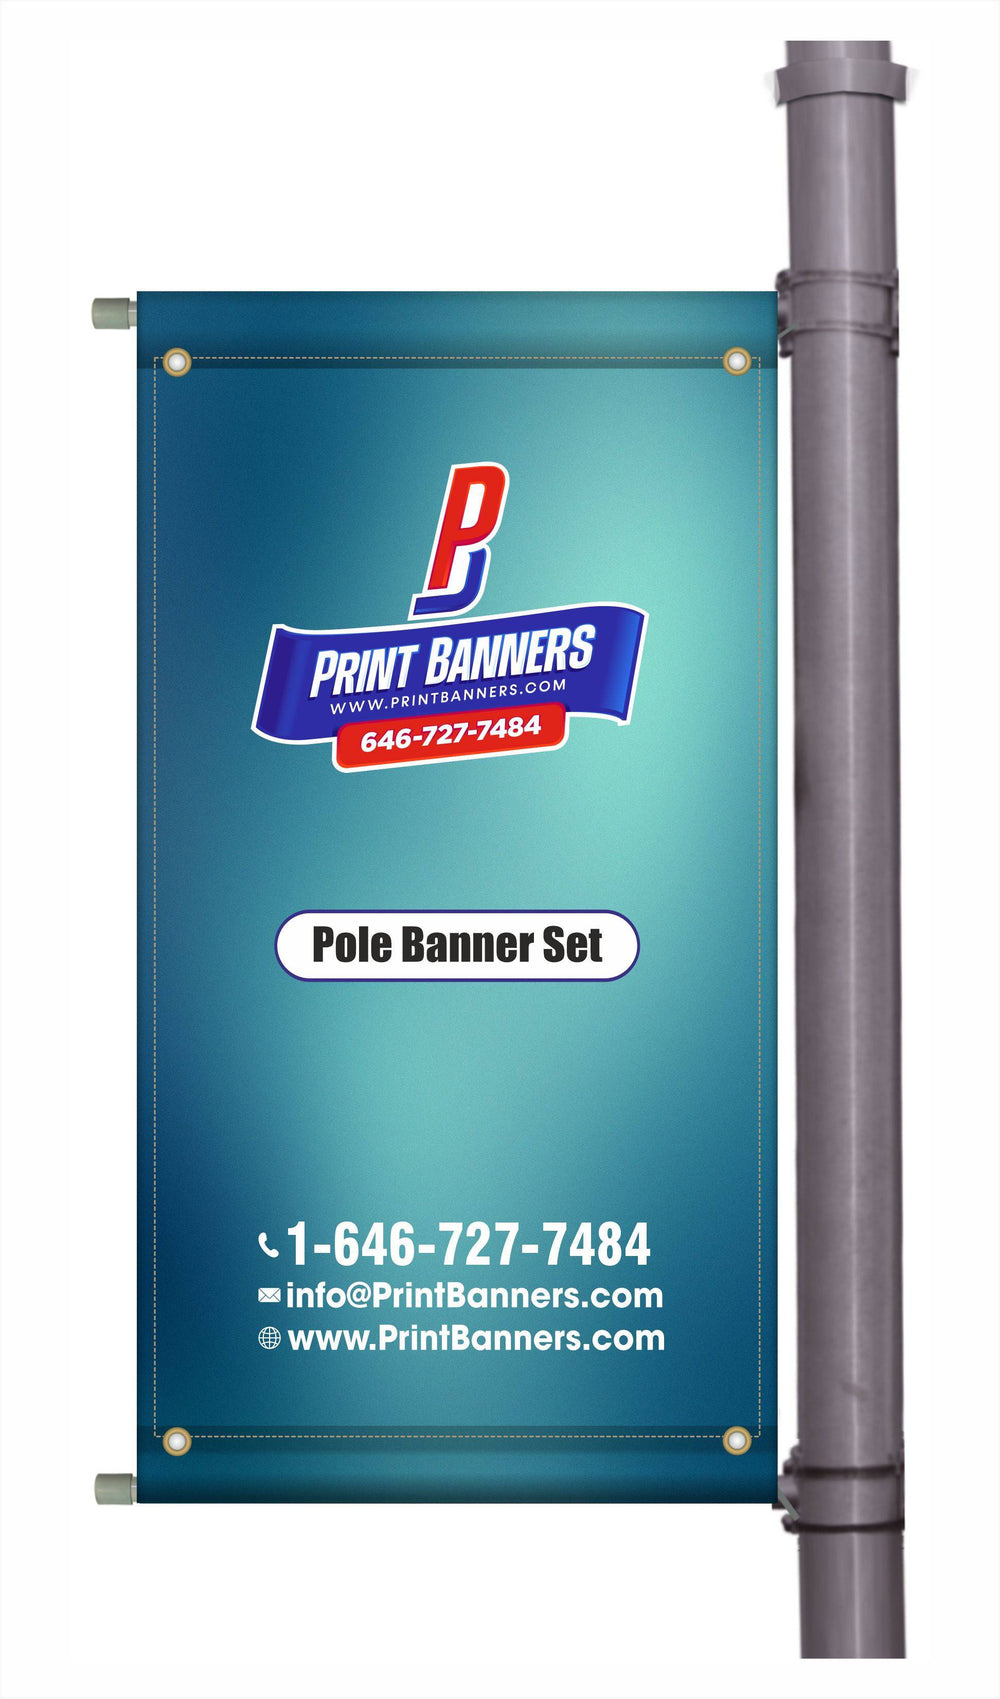 Pole Banner Set - Print Banners NYC